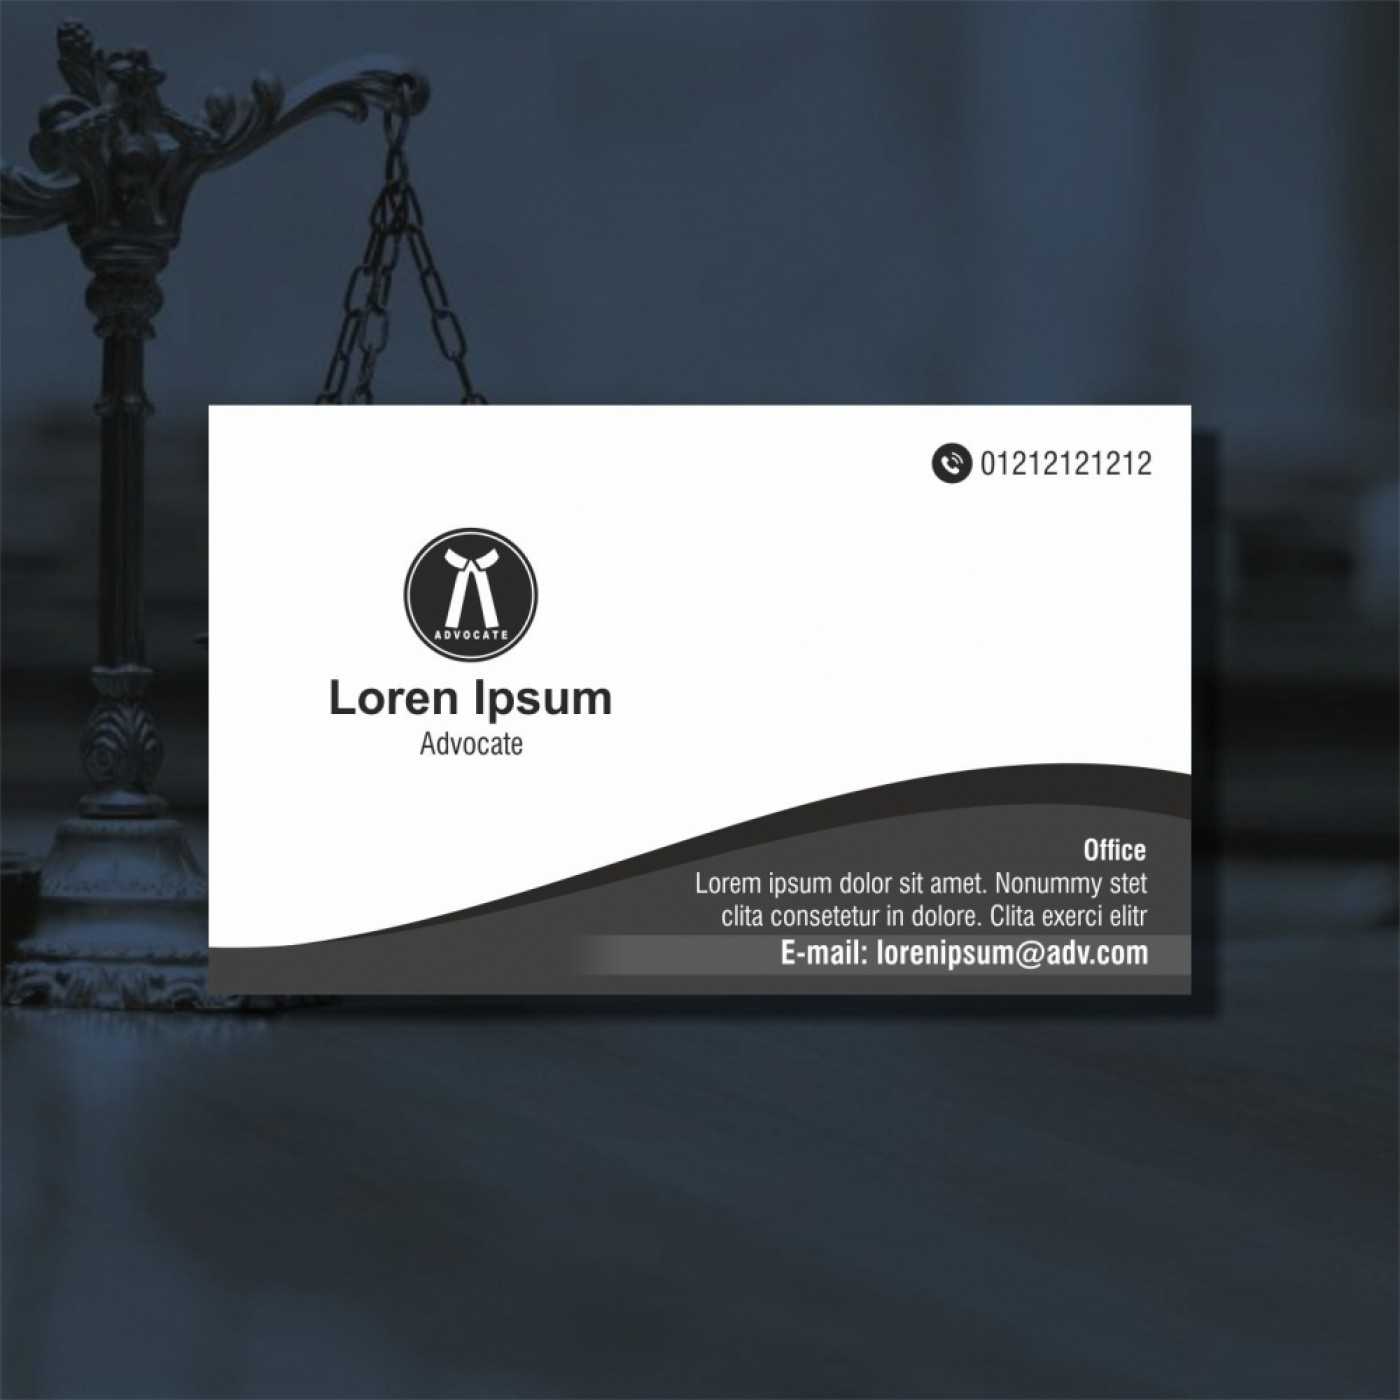 007 Template Ideas Dsc 6178A Lawyer Business Cards Templates Intended For Lawyer Business Cards Templates